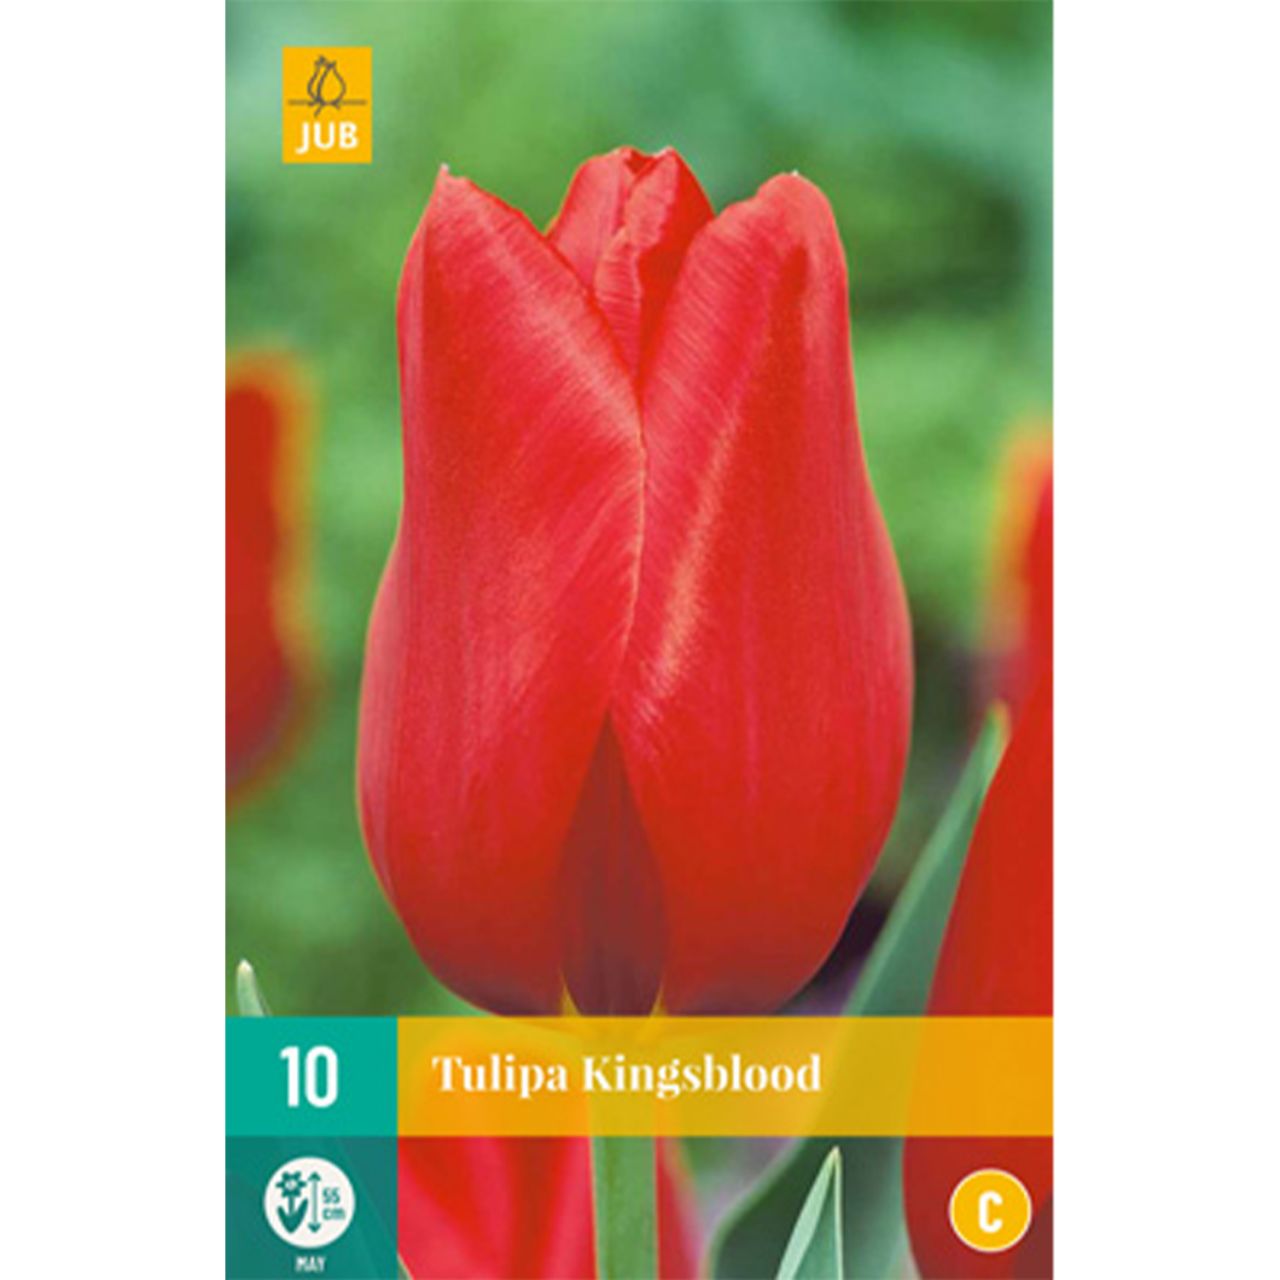 Kategorie <b>Herbst-Blumenzwiebeln </b> - Einfache späte Tulpe 'Kingsblood' - 10 Stück - Tulipa